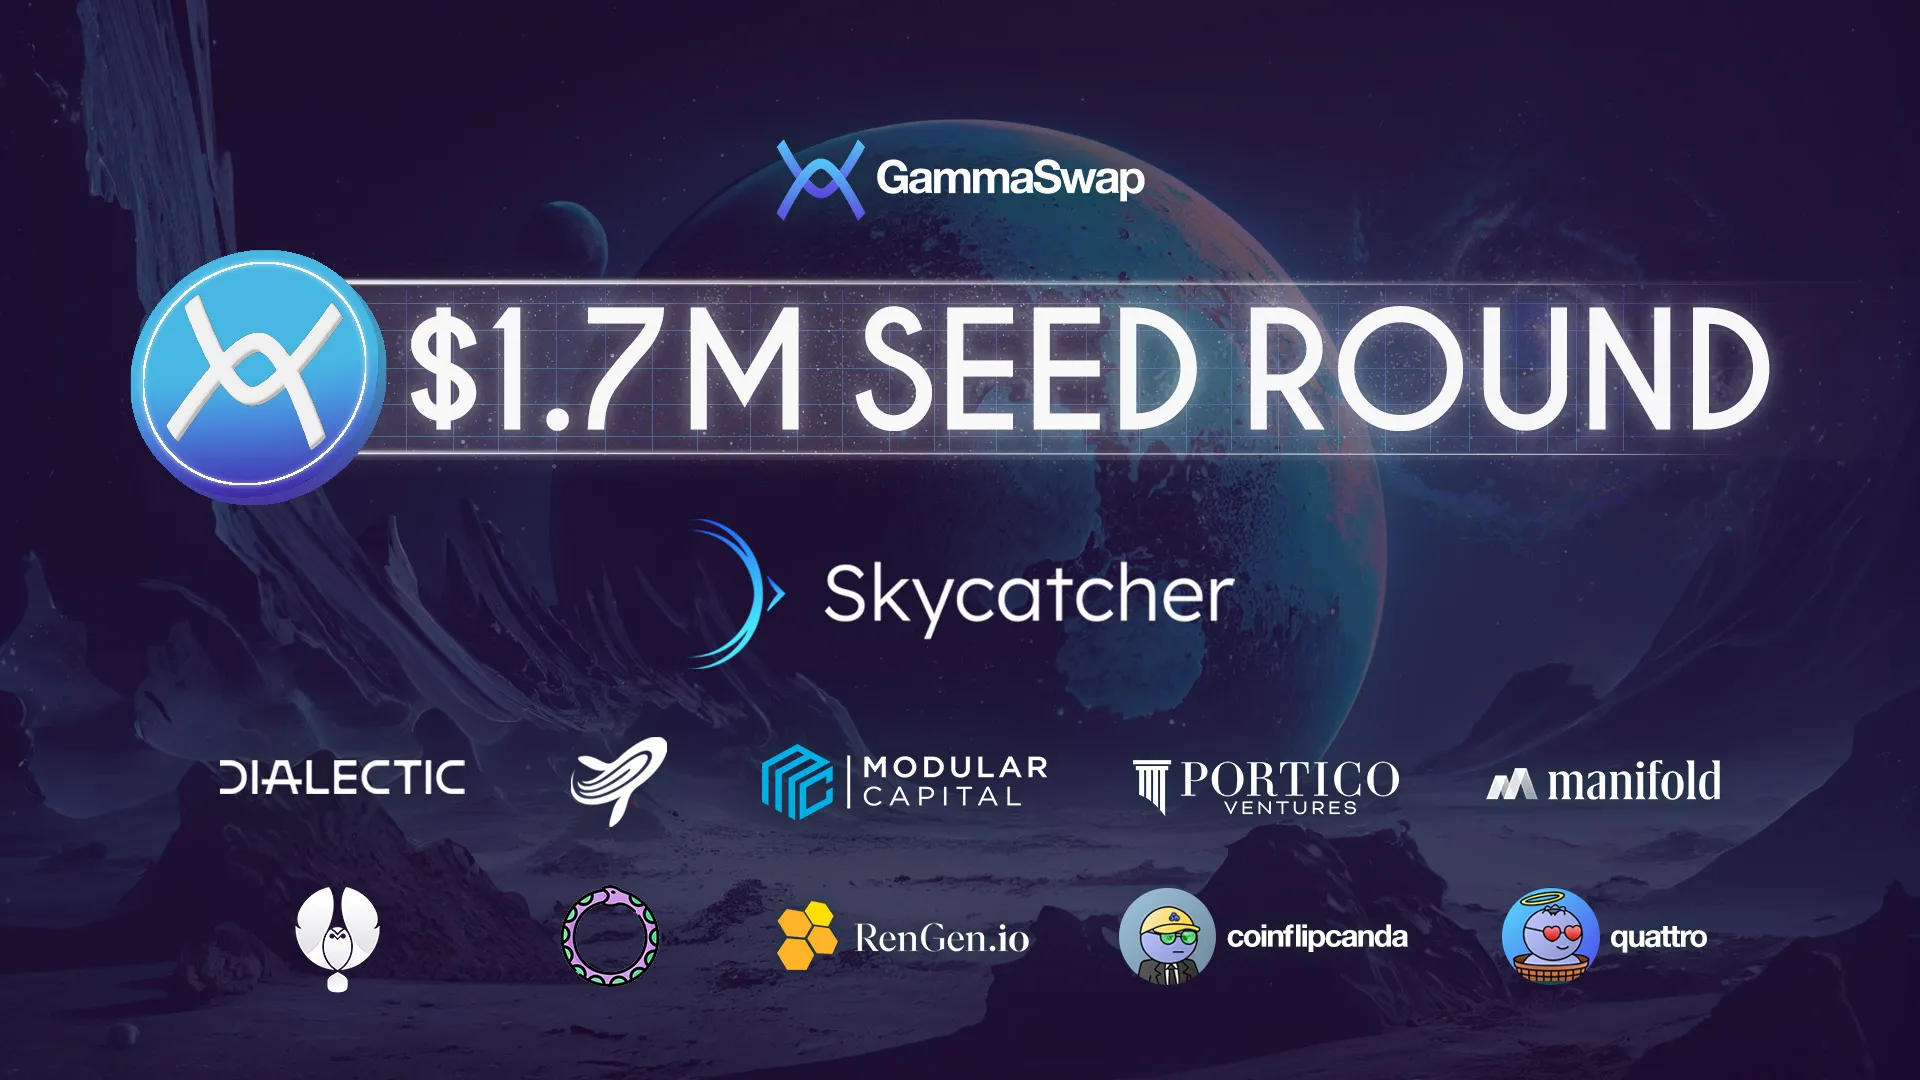 GammaSwap Closes $1.7M Seed Round